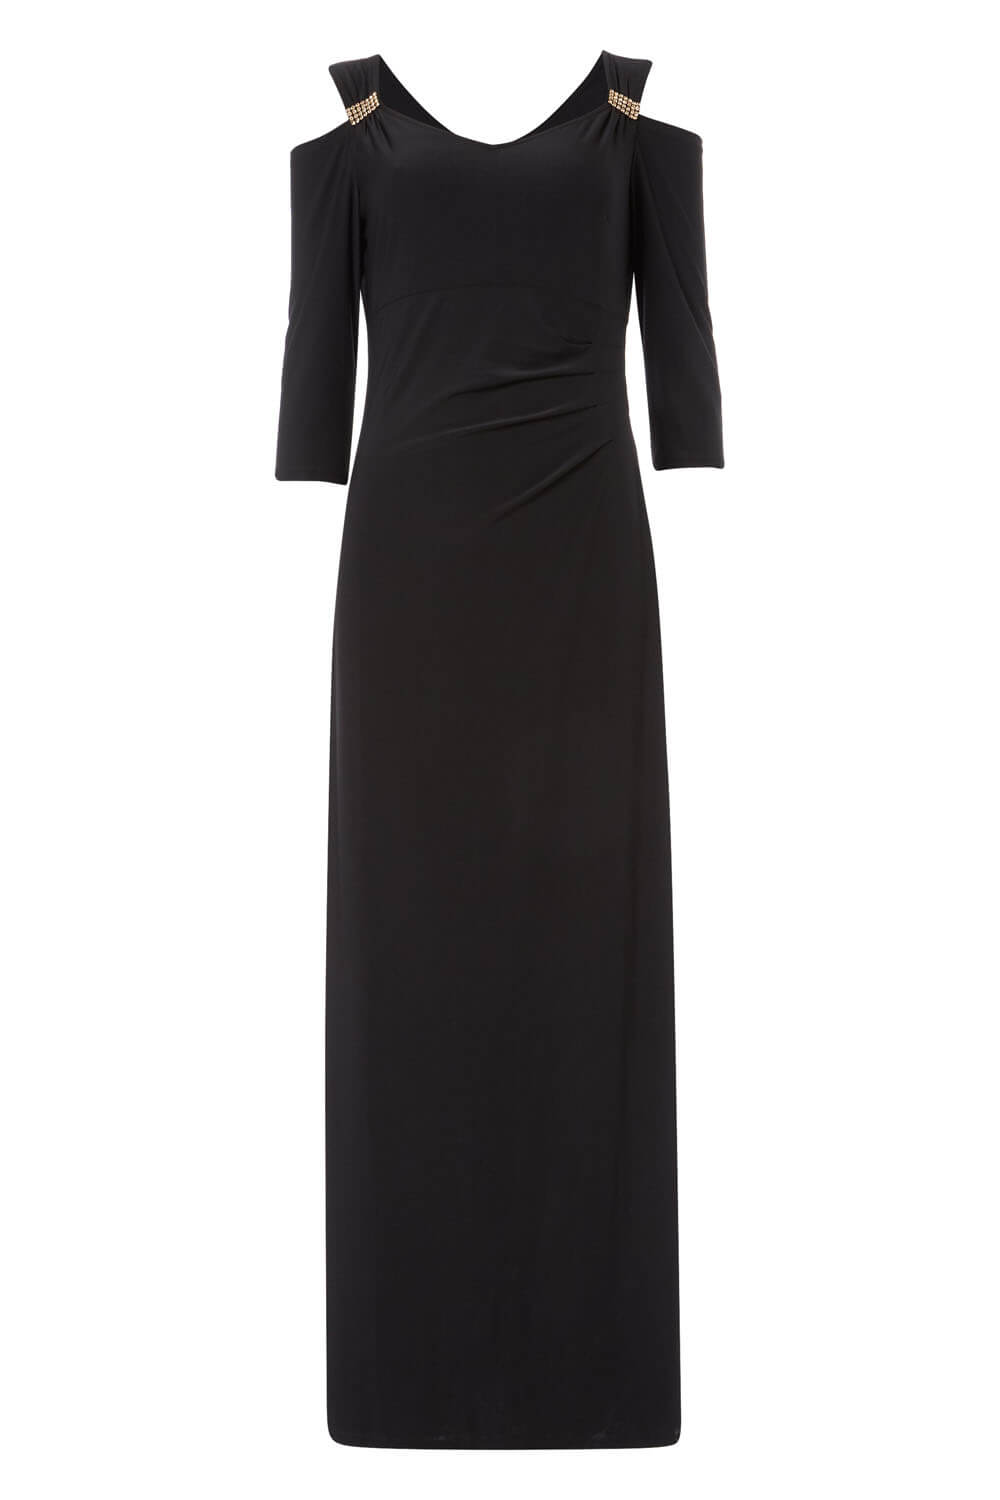 Black Cold Shoulder Diamante Maxi Dress, Image 4 of 4